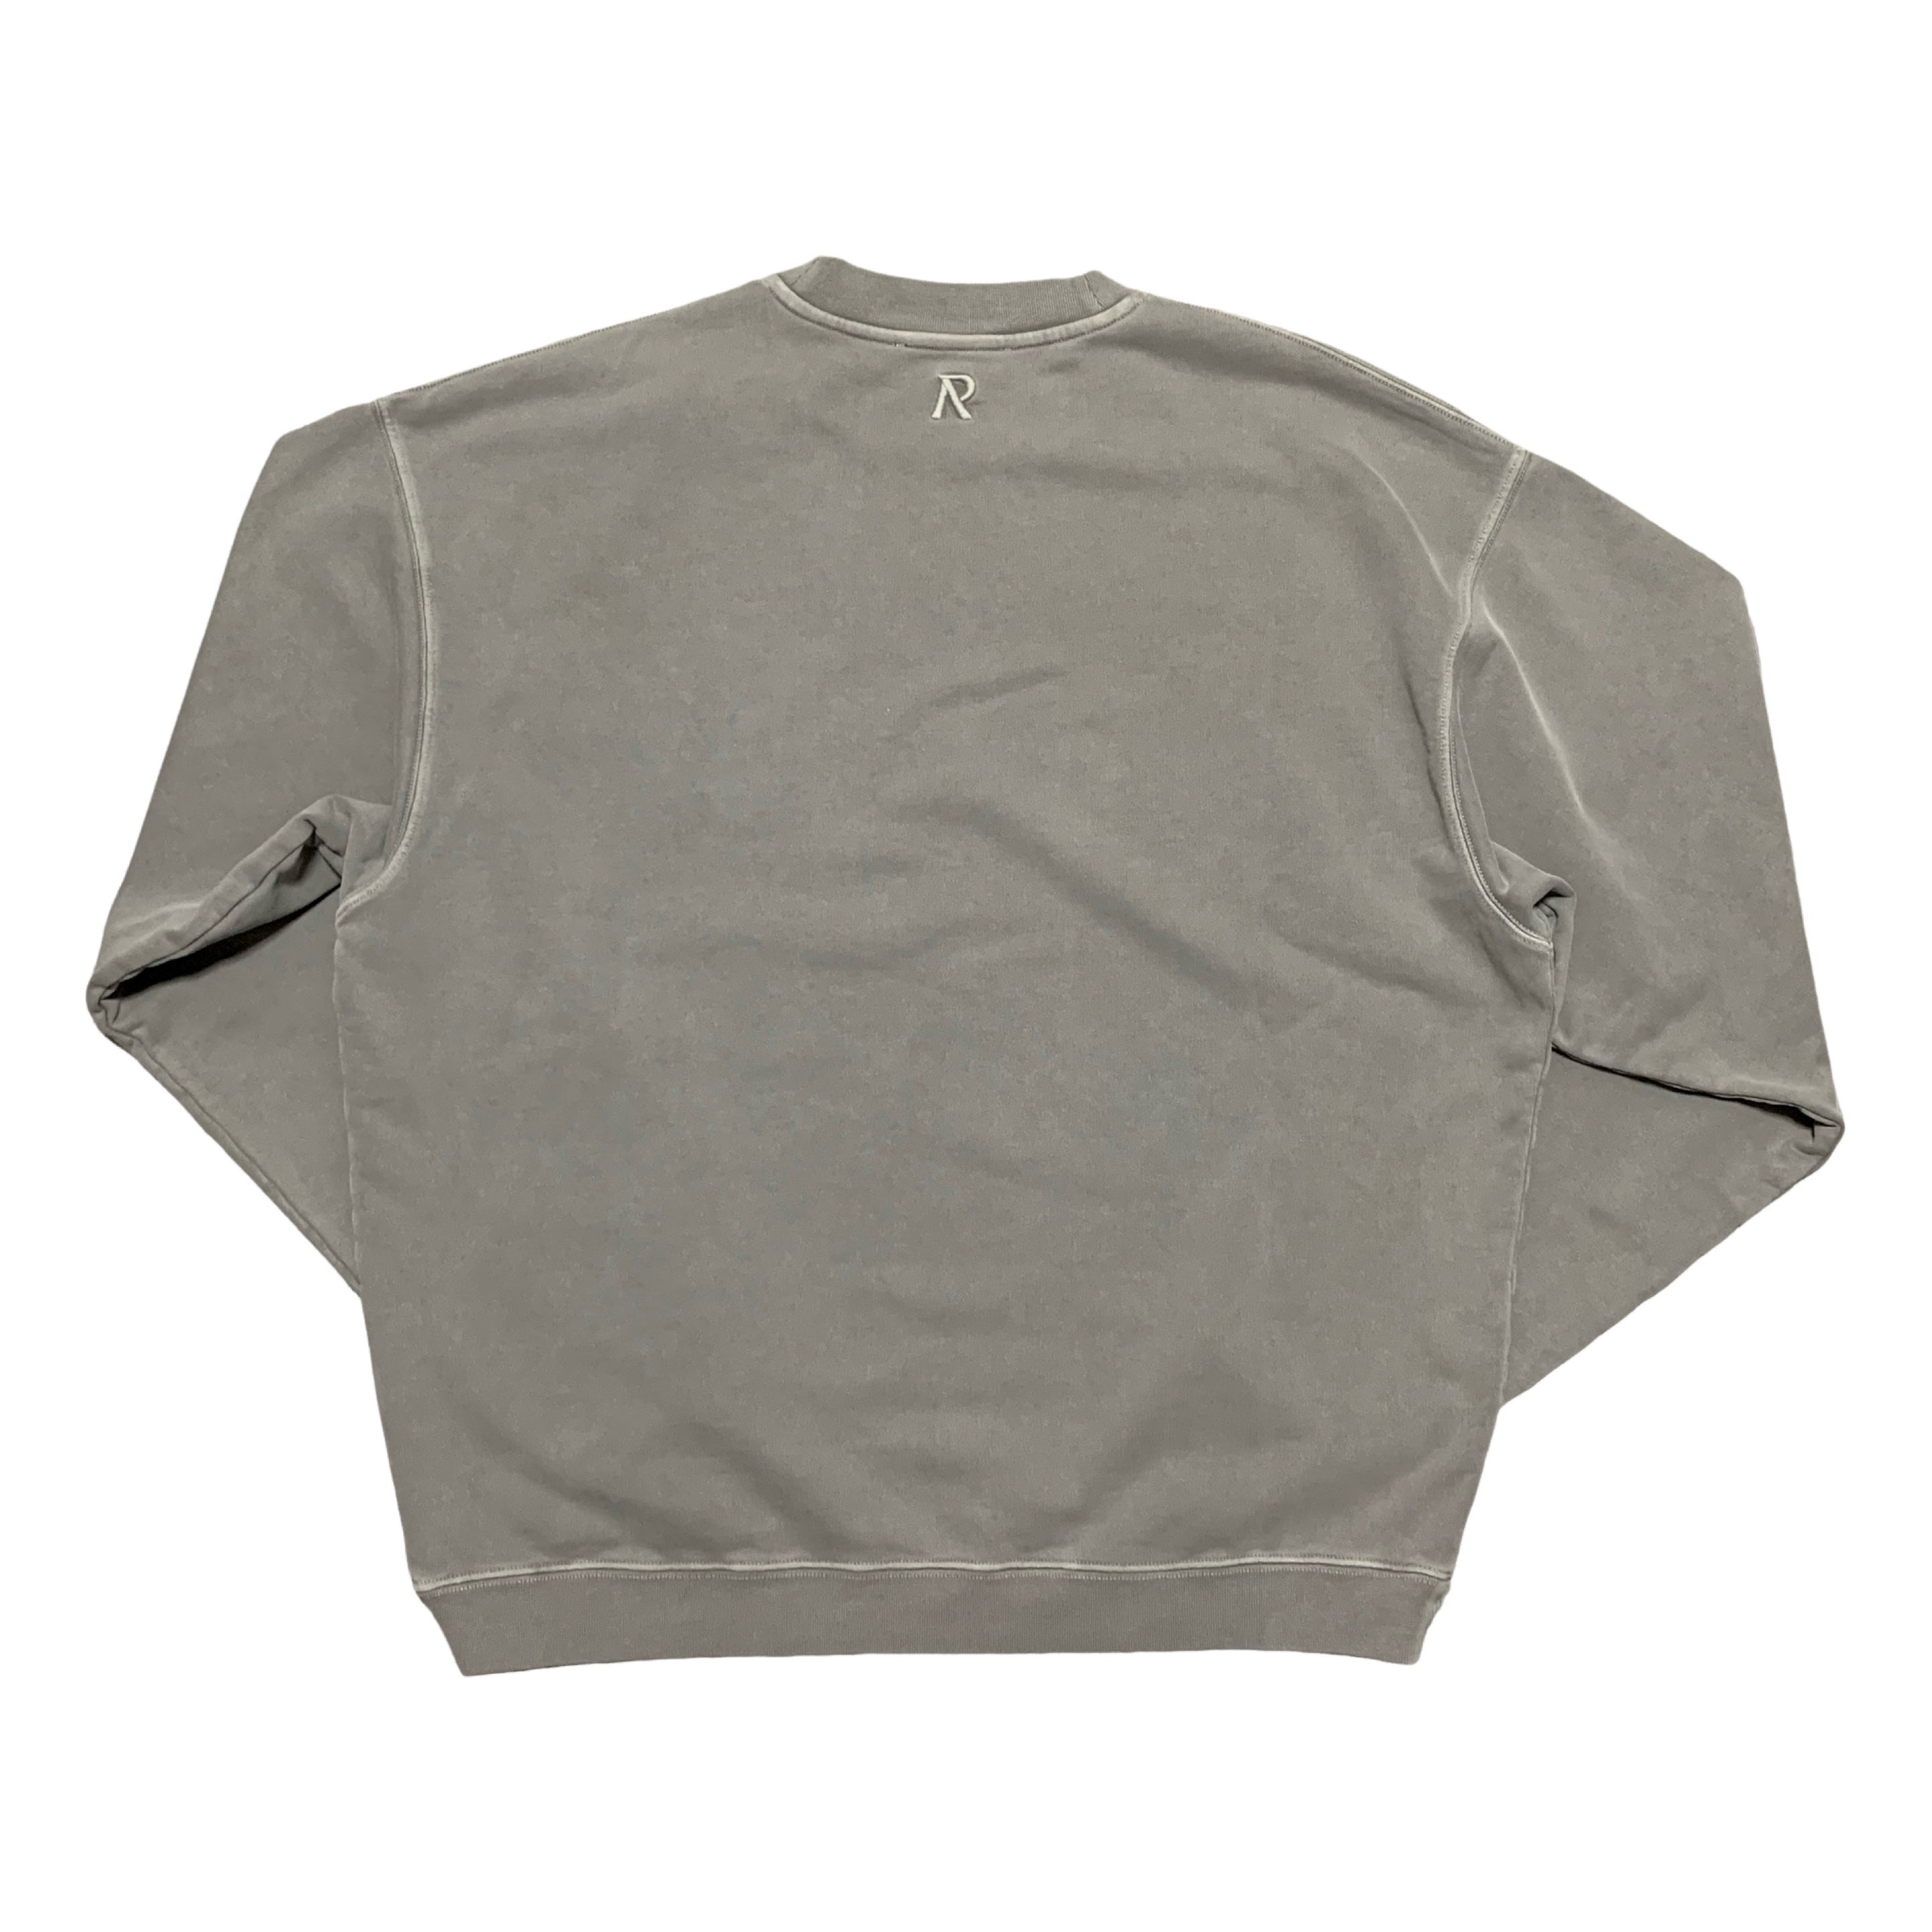 Represent Small Initial Ultimate Grey Sweater Sweatshirt